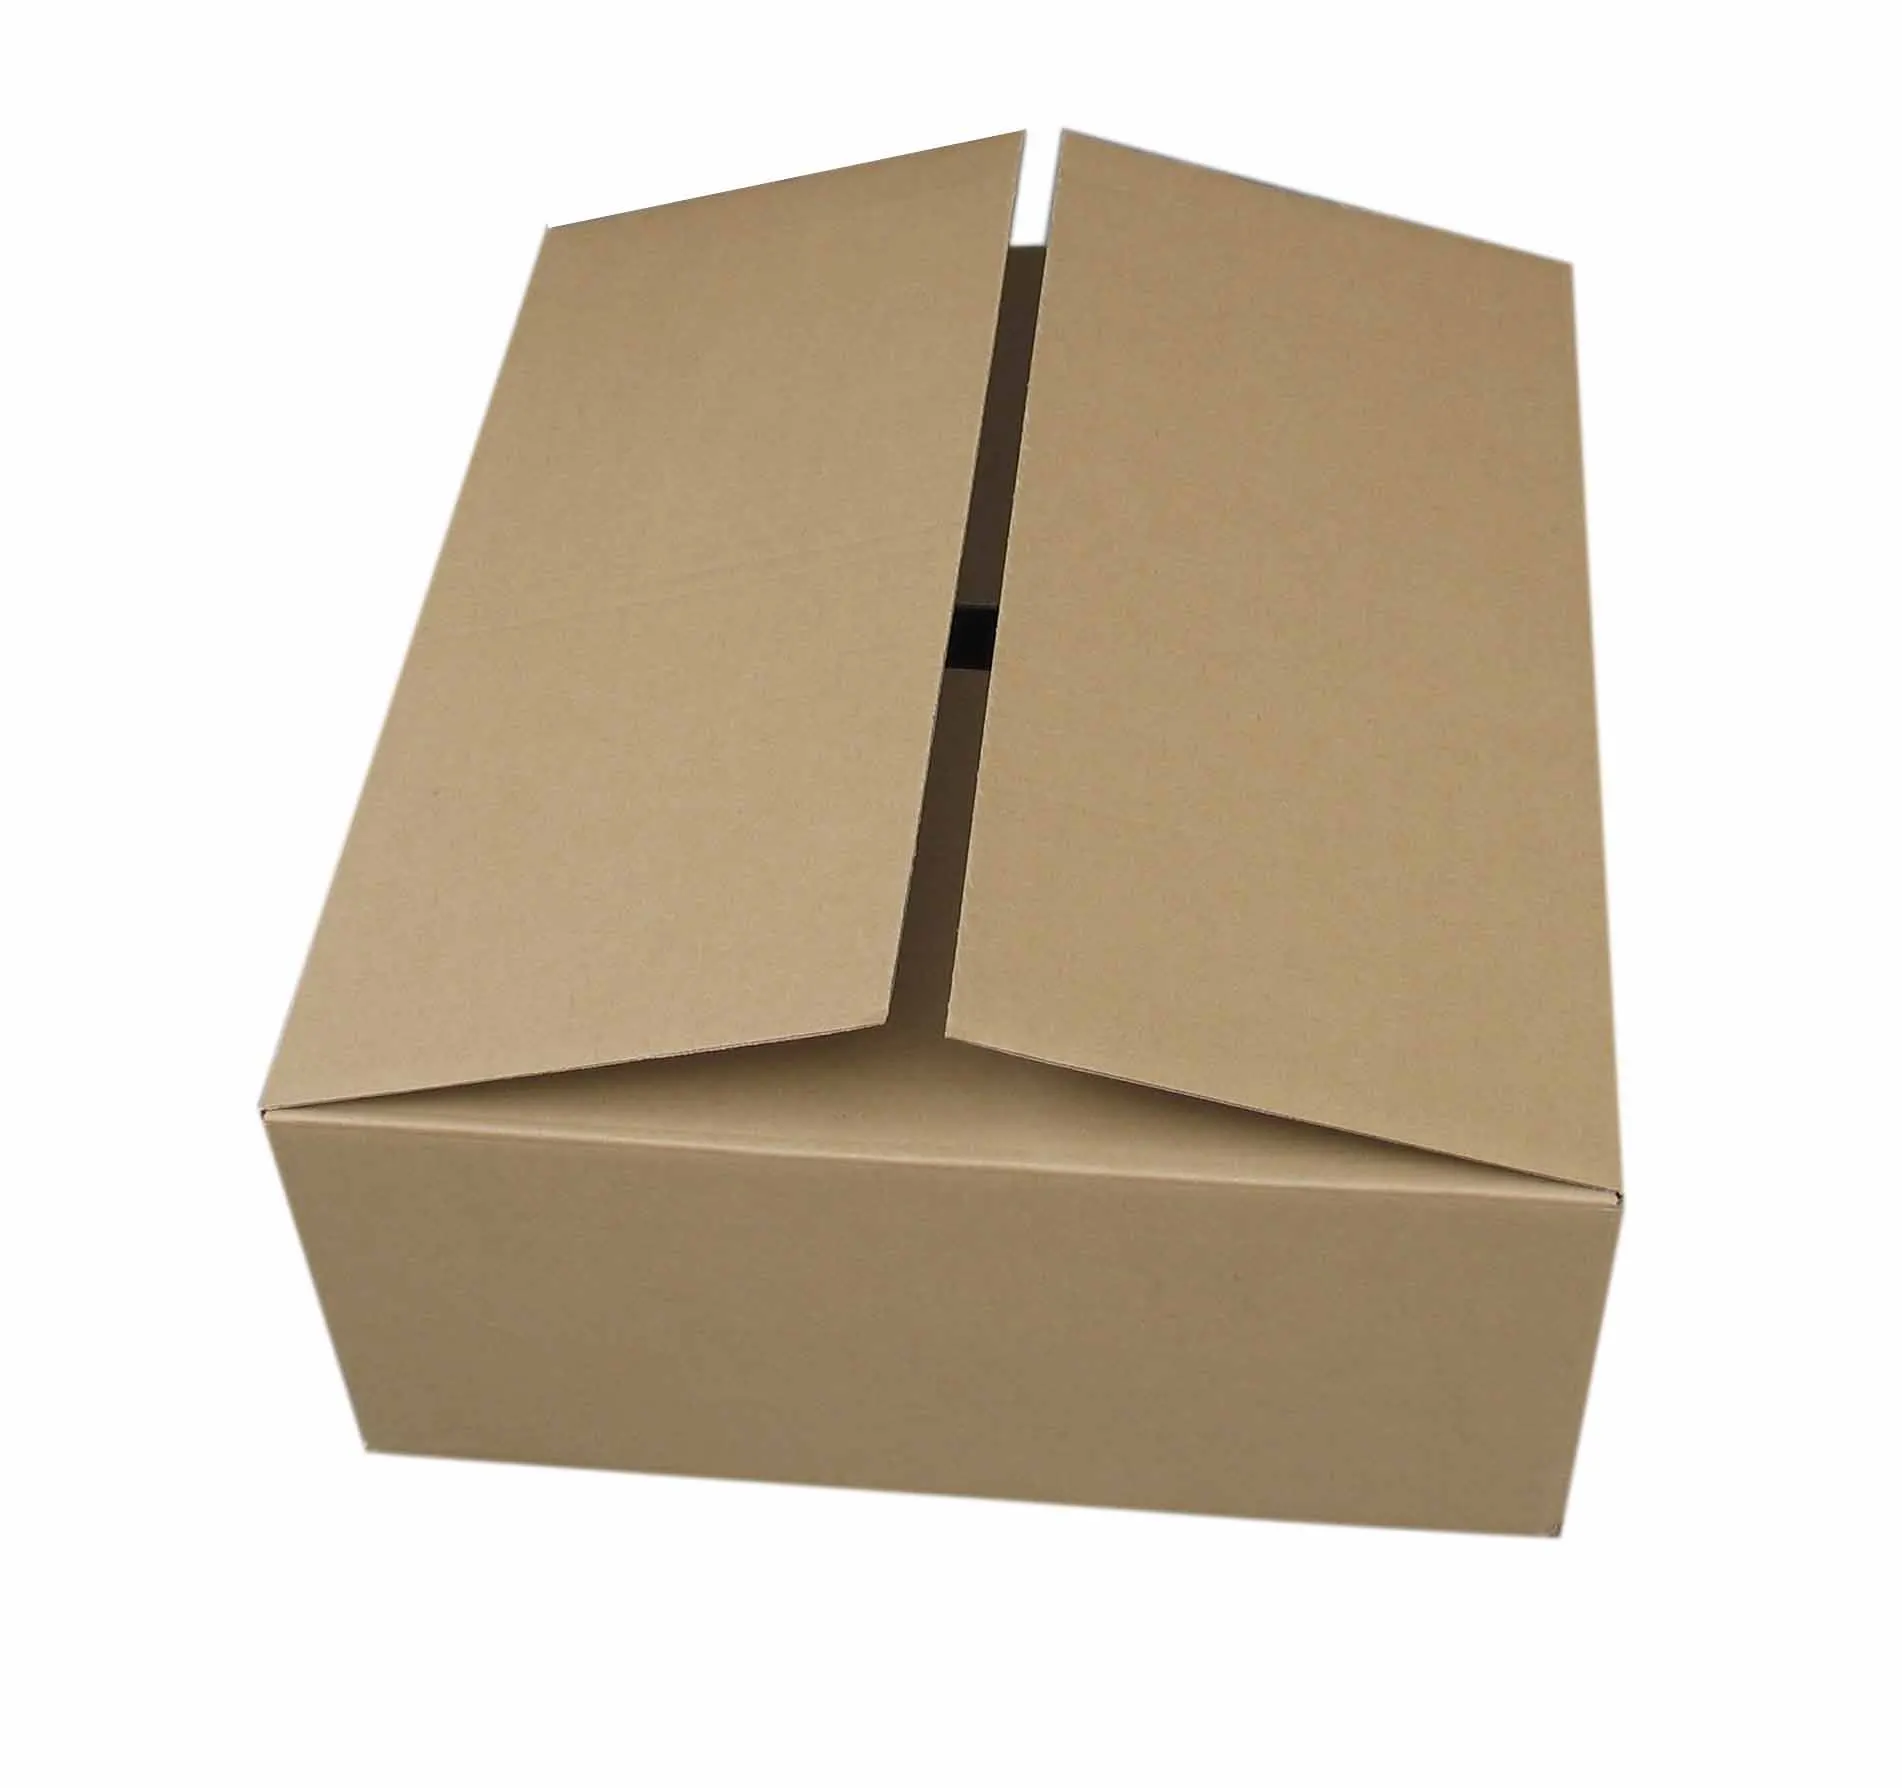 Corrugated Carton Box - Buy Carton Box 